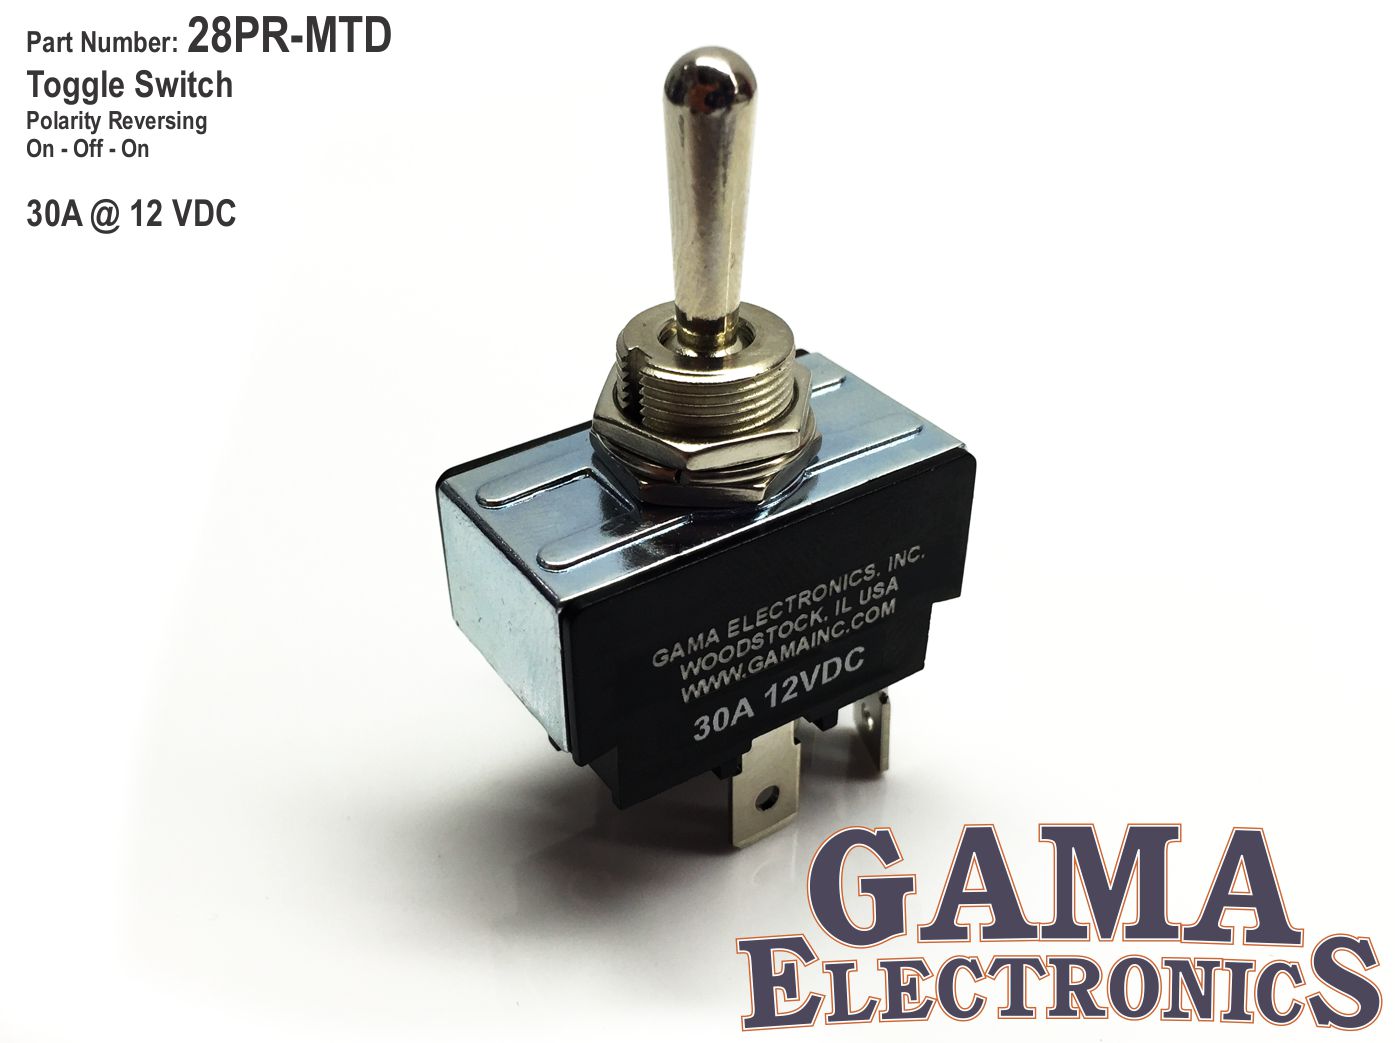 28PR-MTD - Gama Electronics